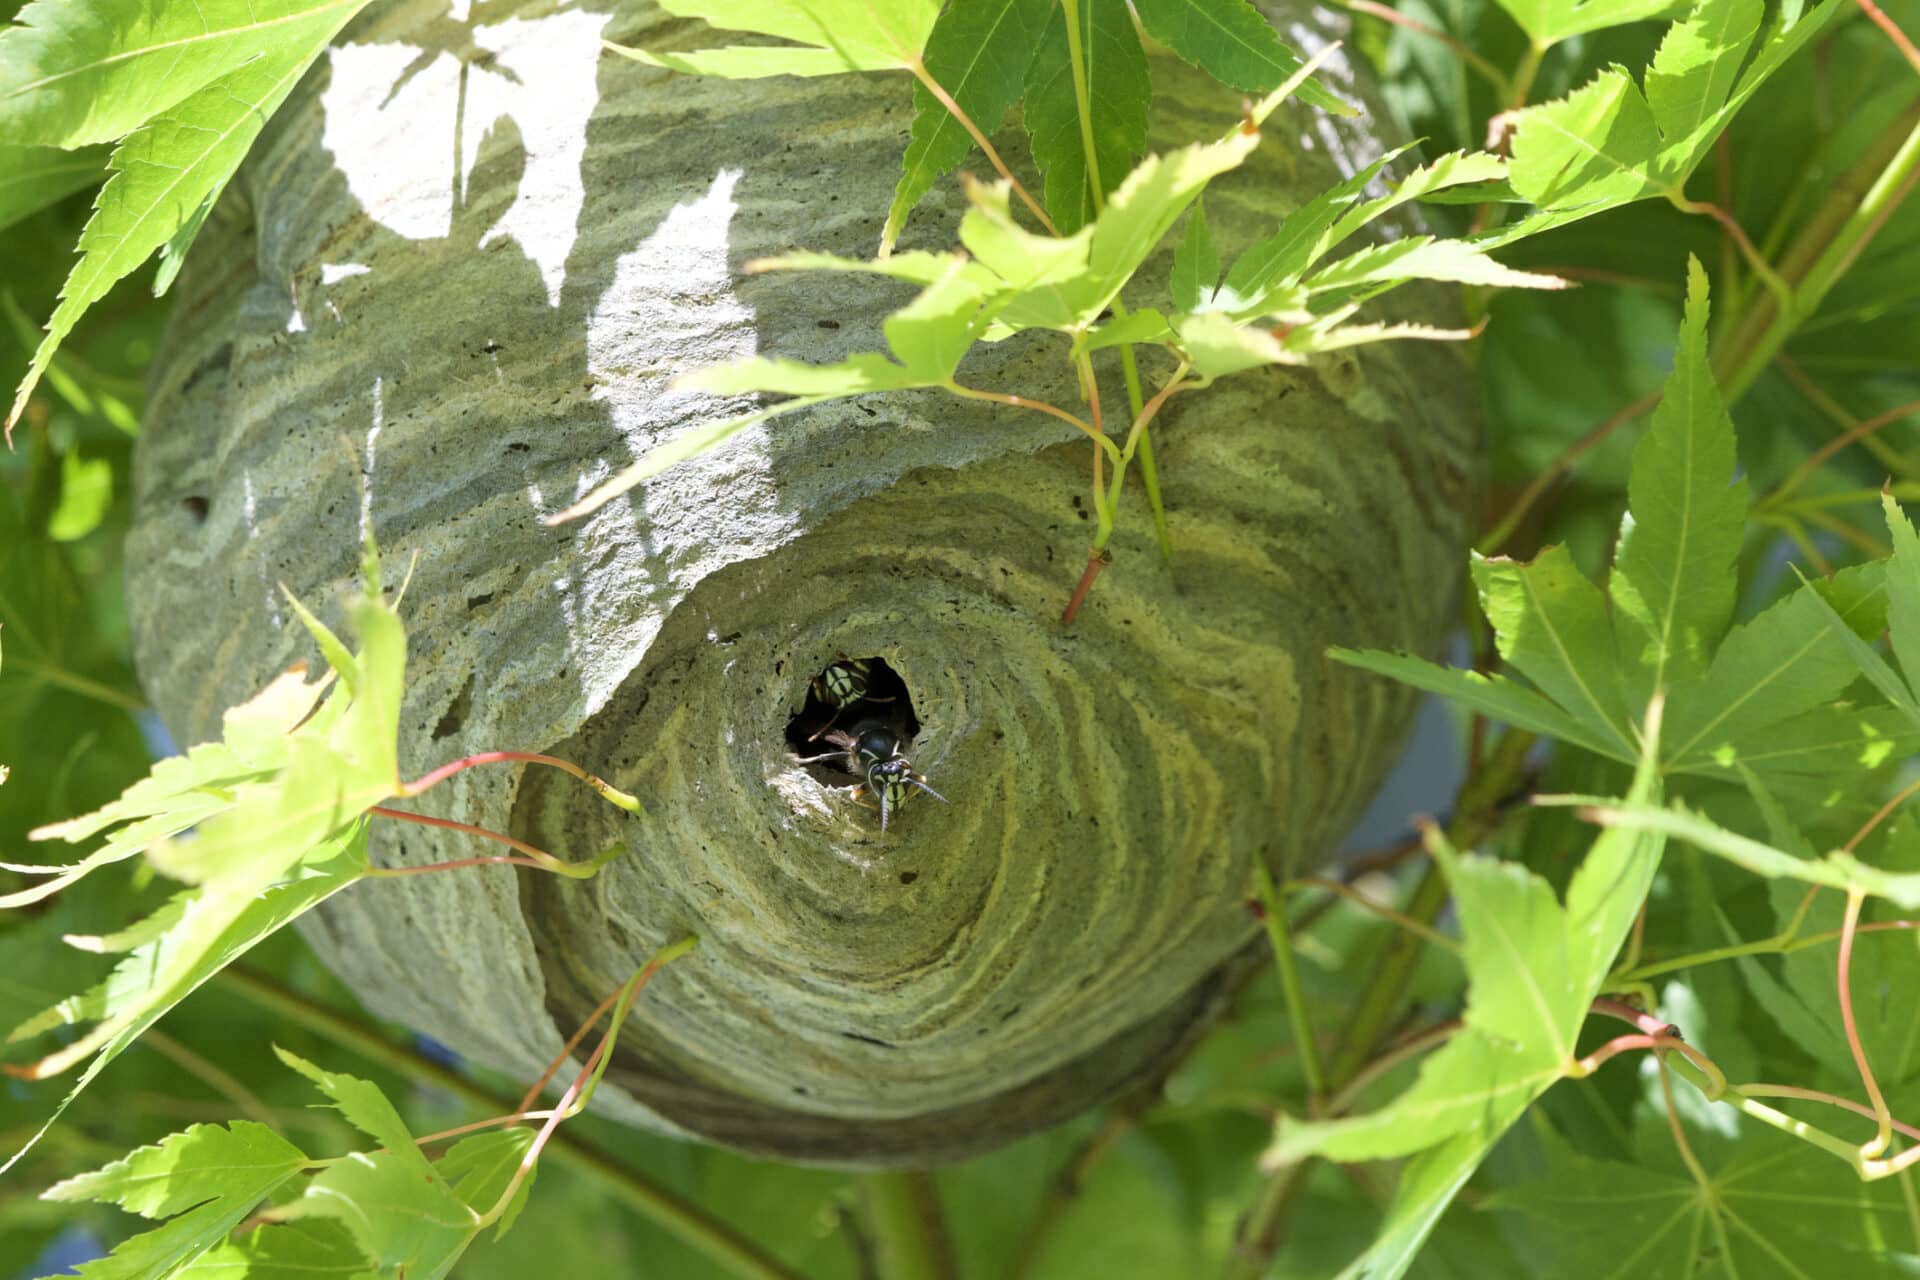 Identifying Stinging Insect Nests